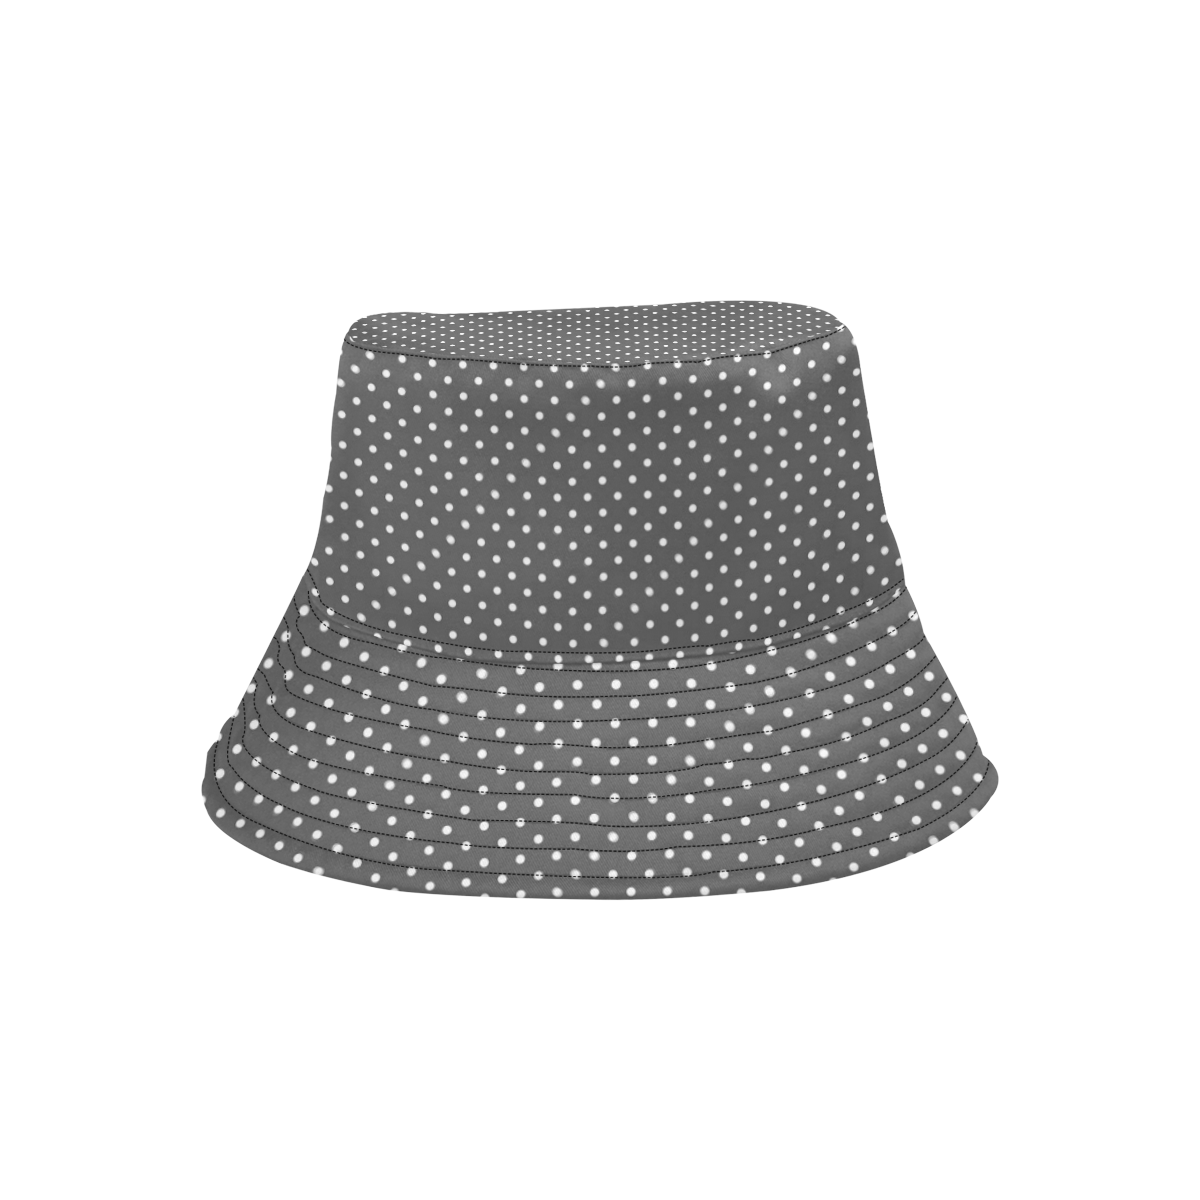 polkadots20160643 All Over Print Bucket Hat